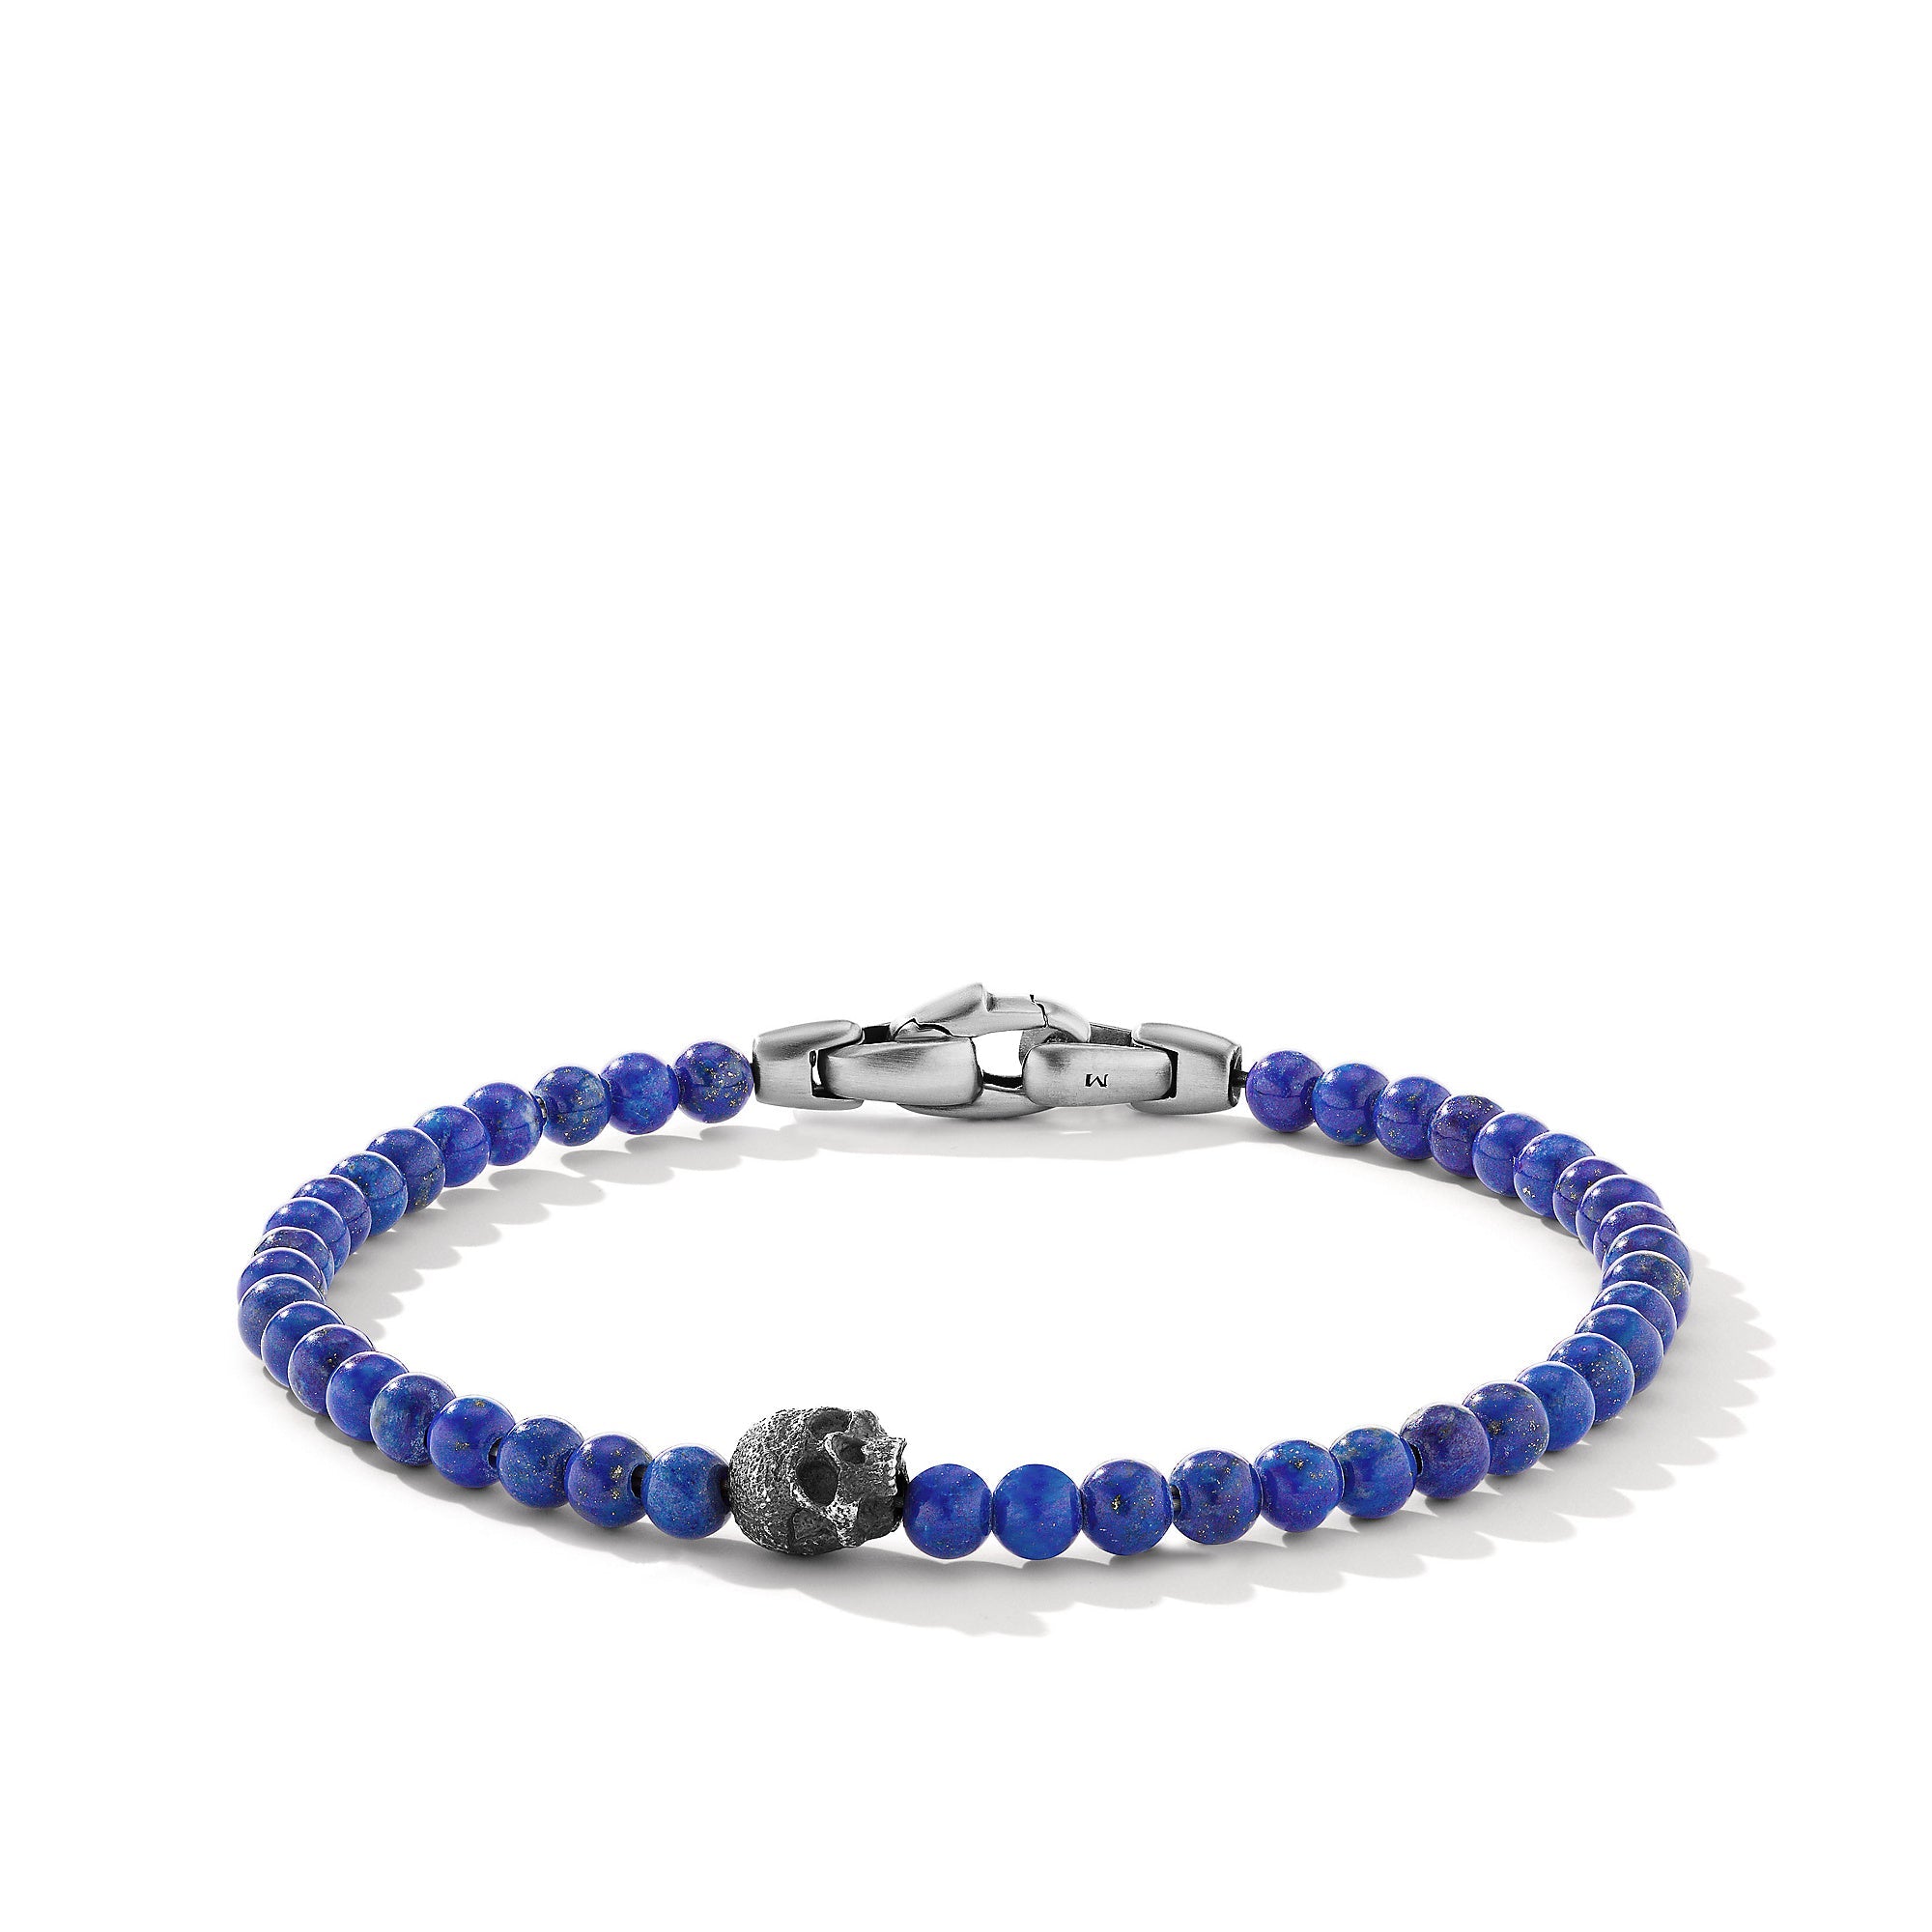 Spiritual Beads Skull Bracelet with Lapis